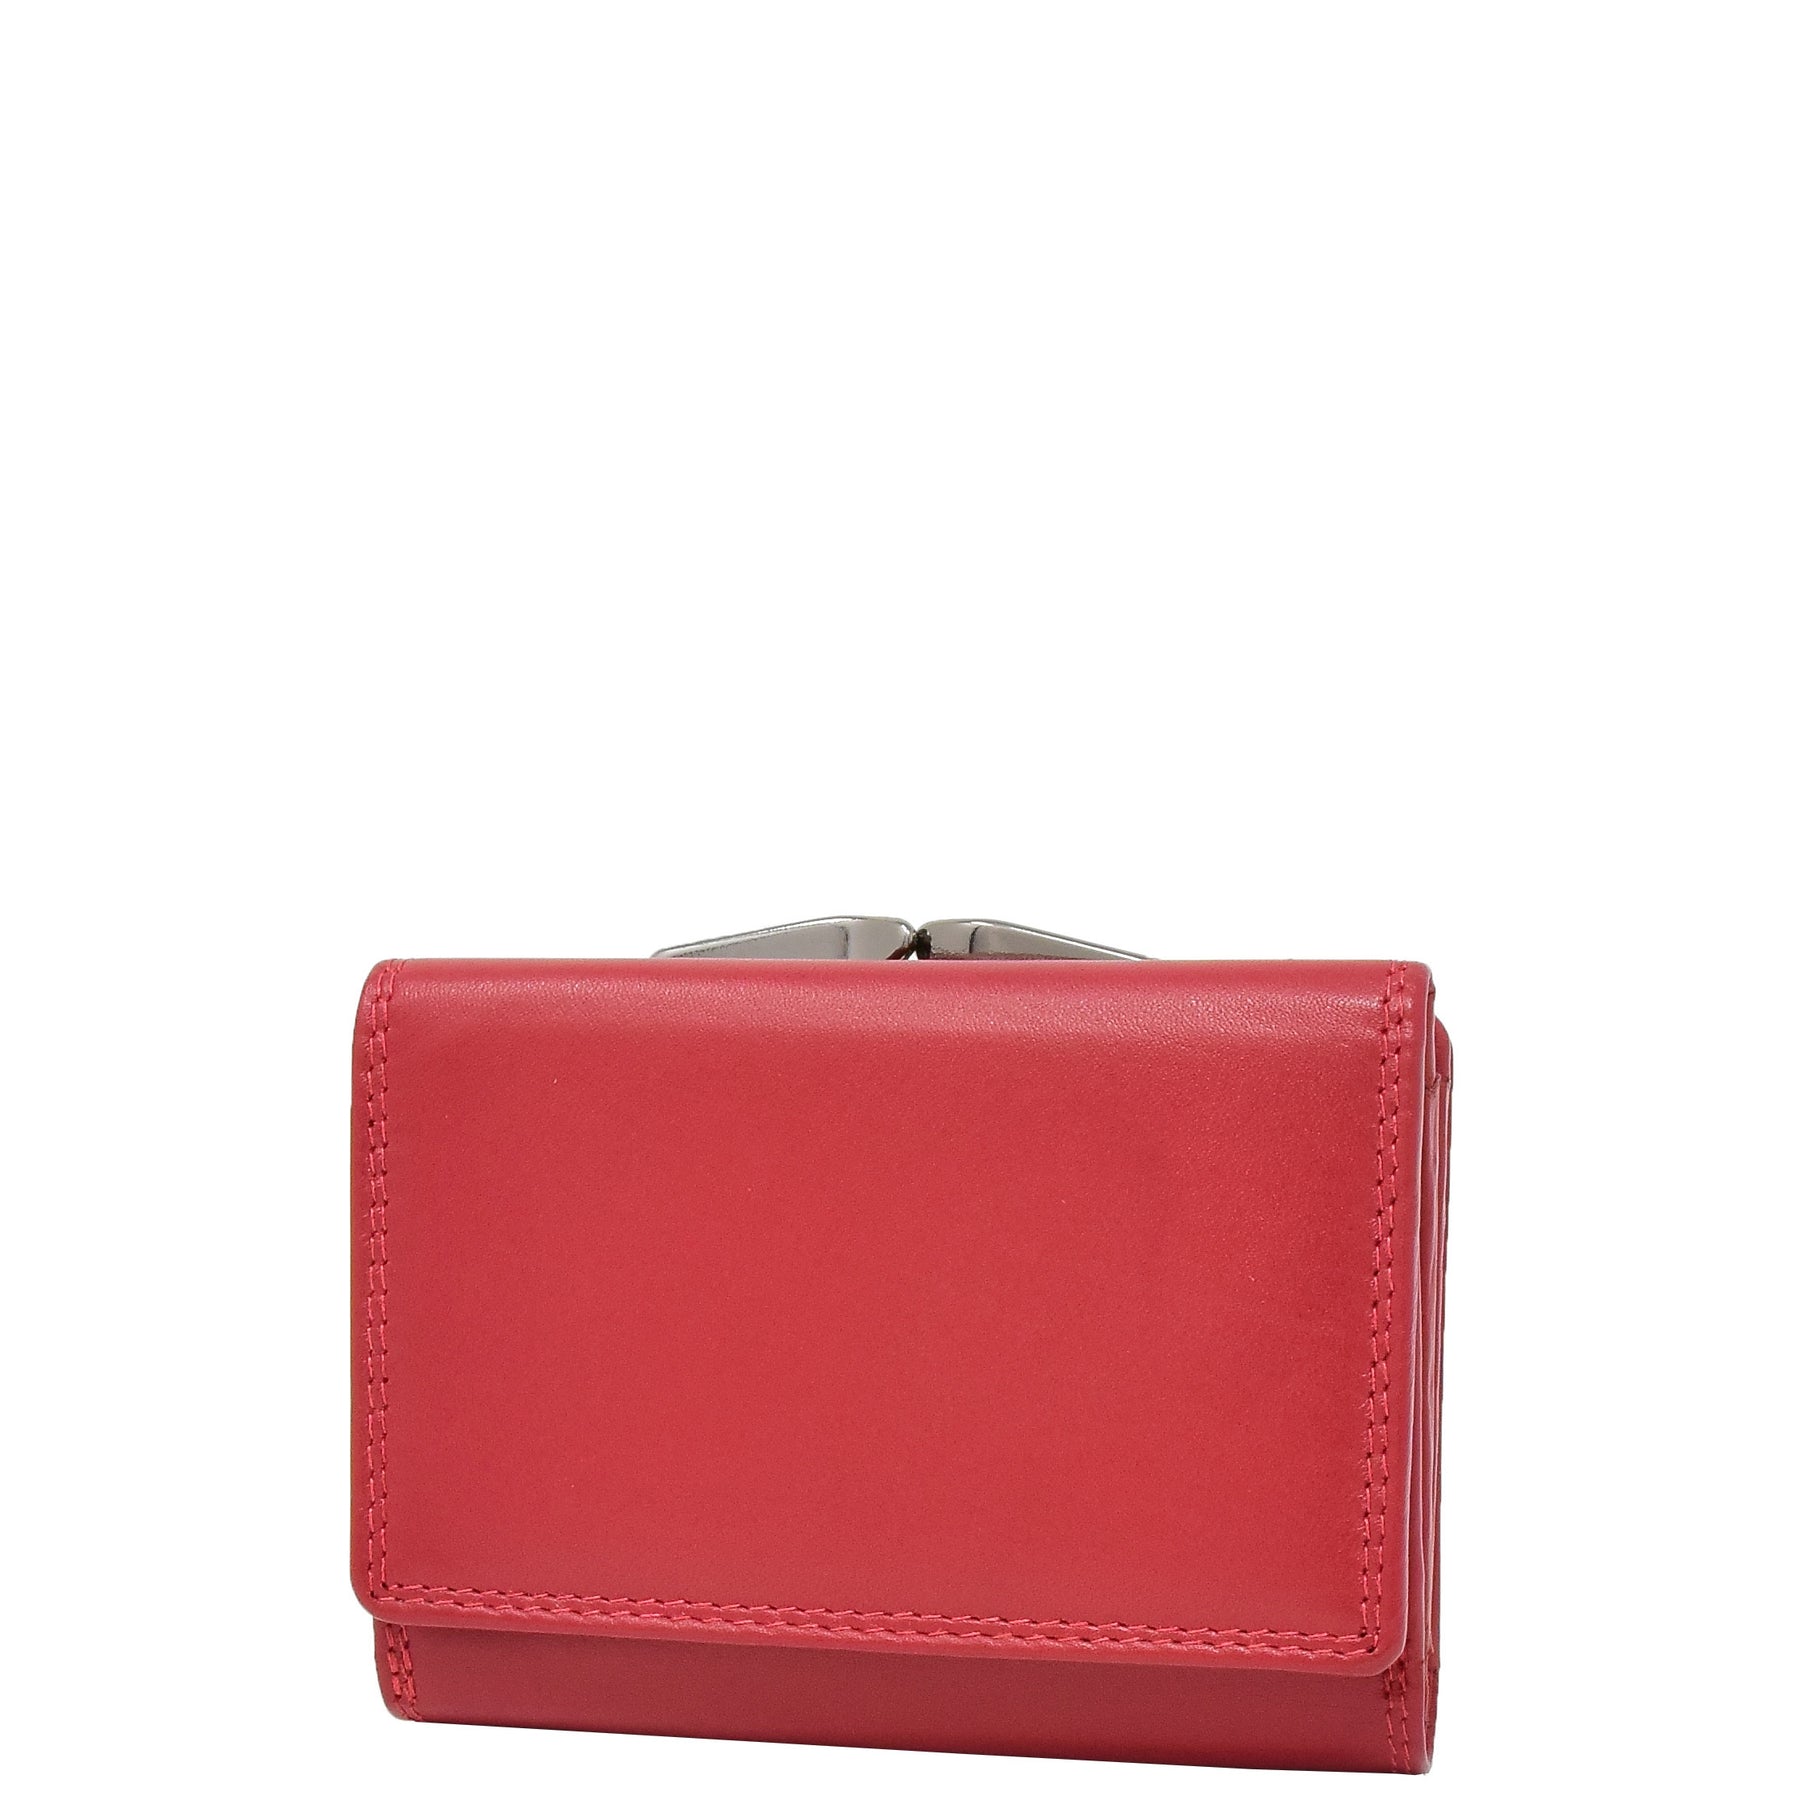 Red multi colour leather purse